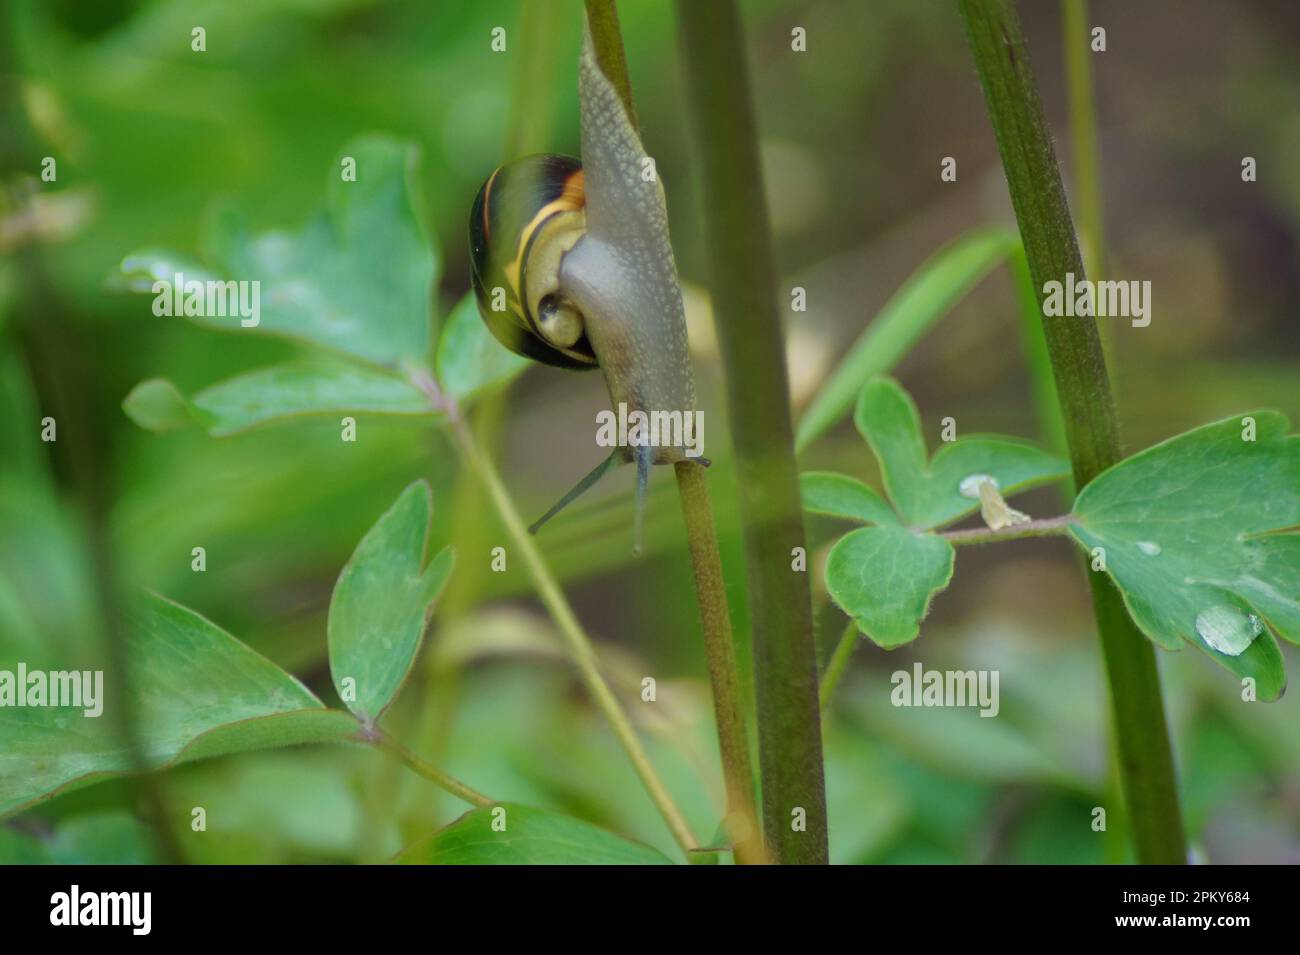 a banded snail on a plant stem Stock Photo